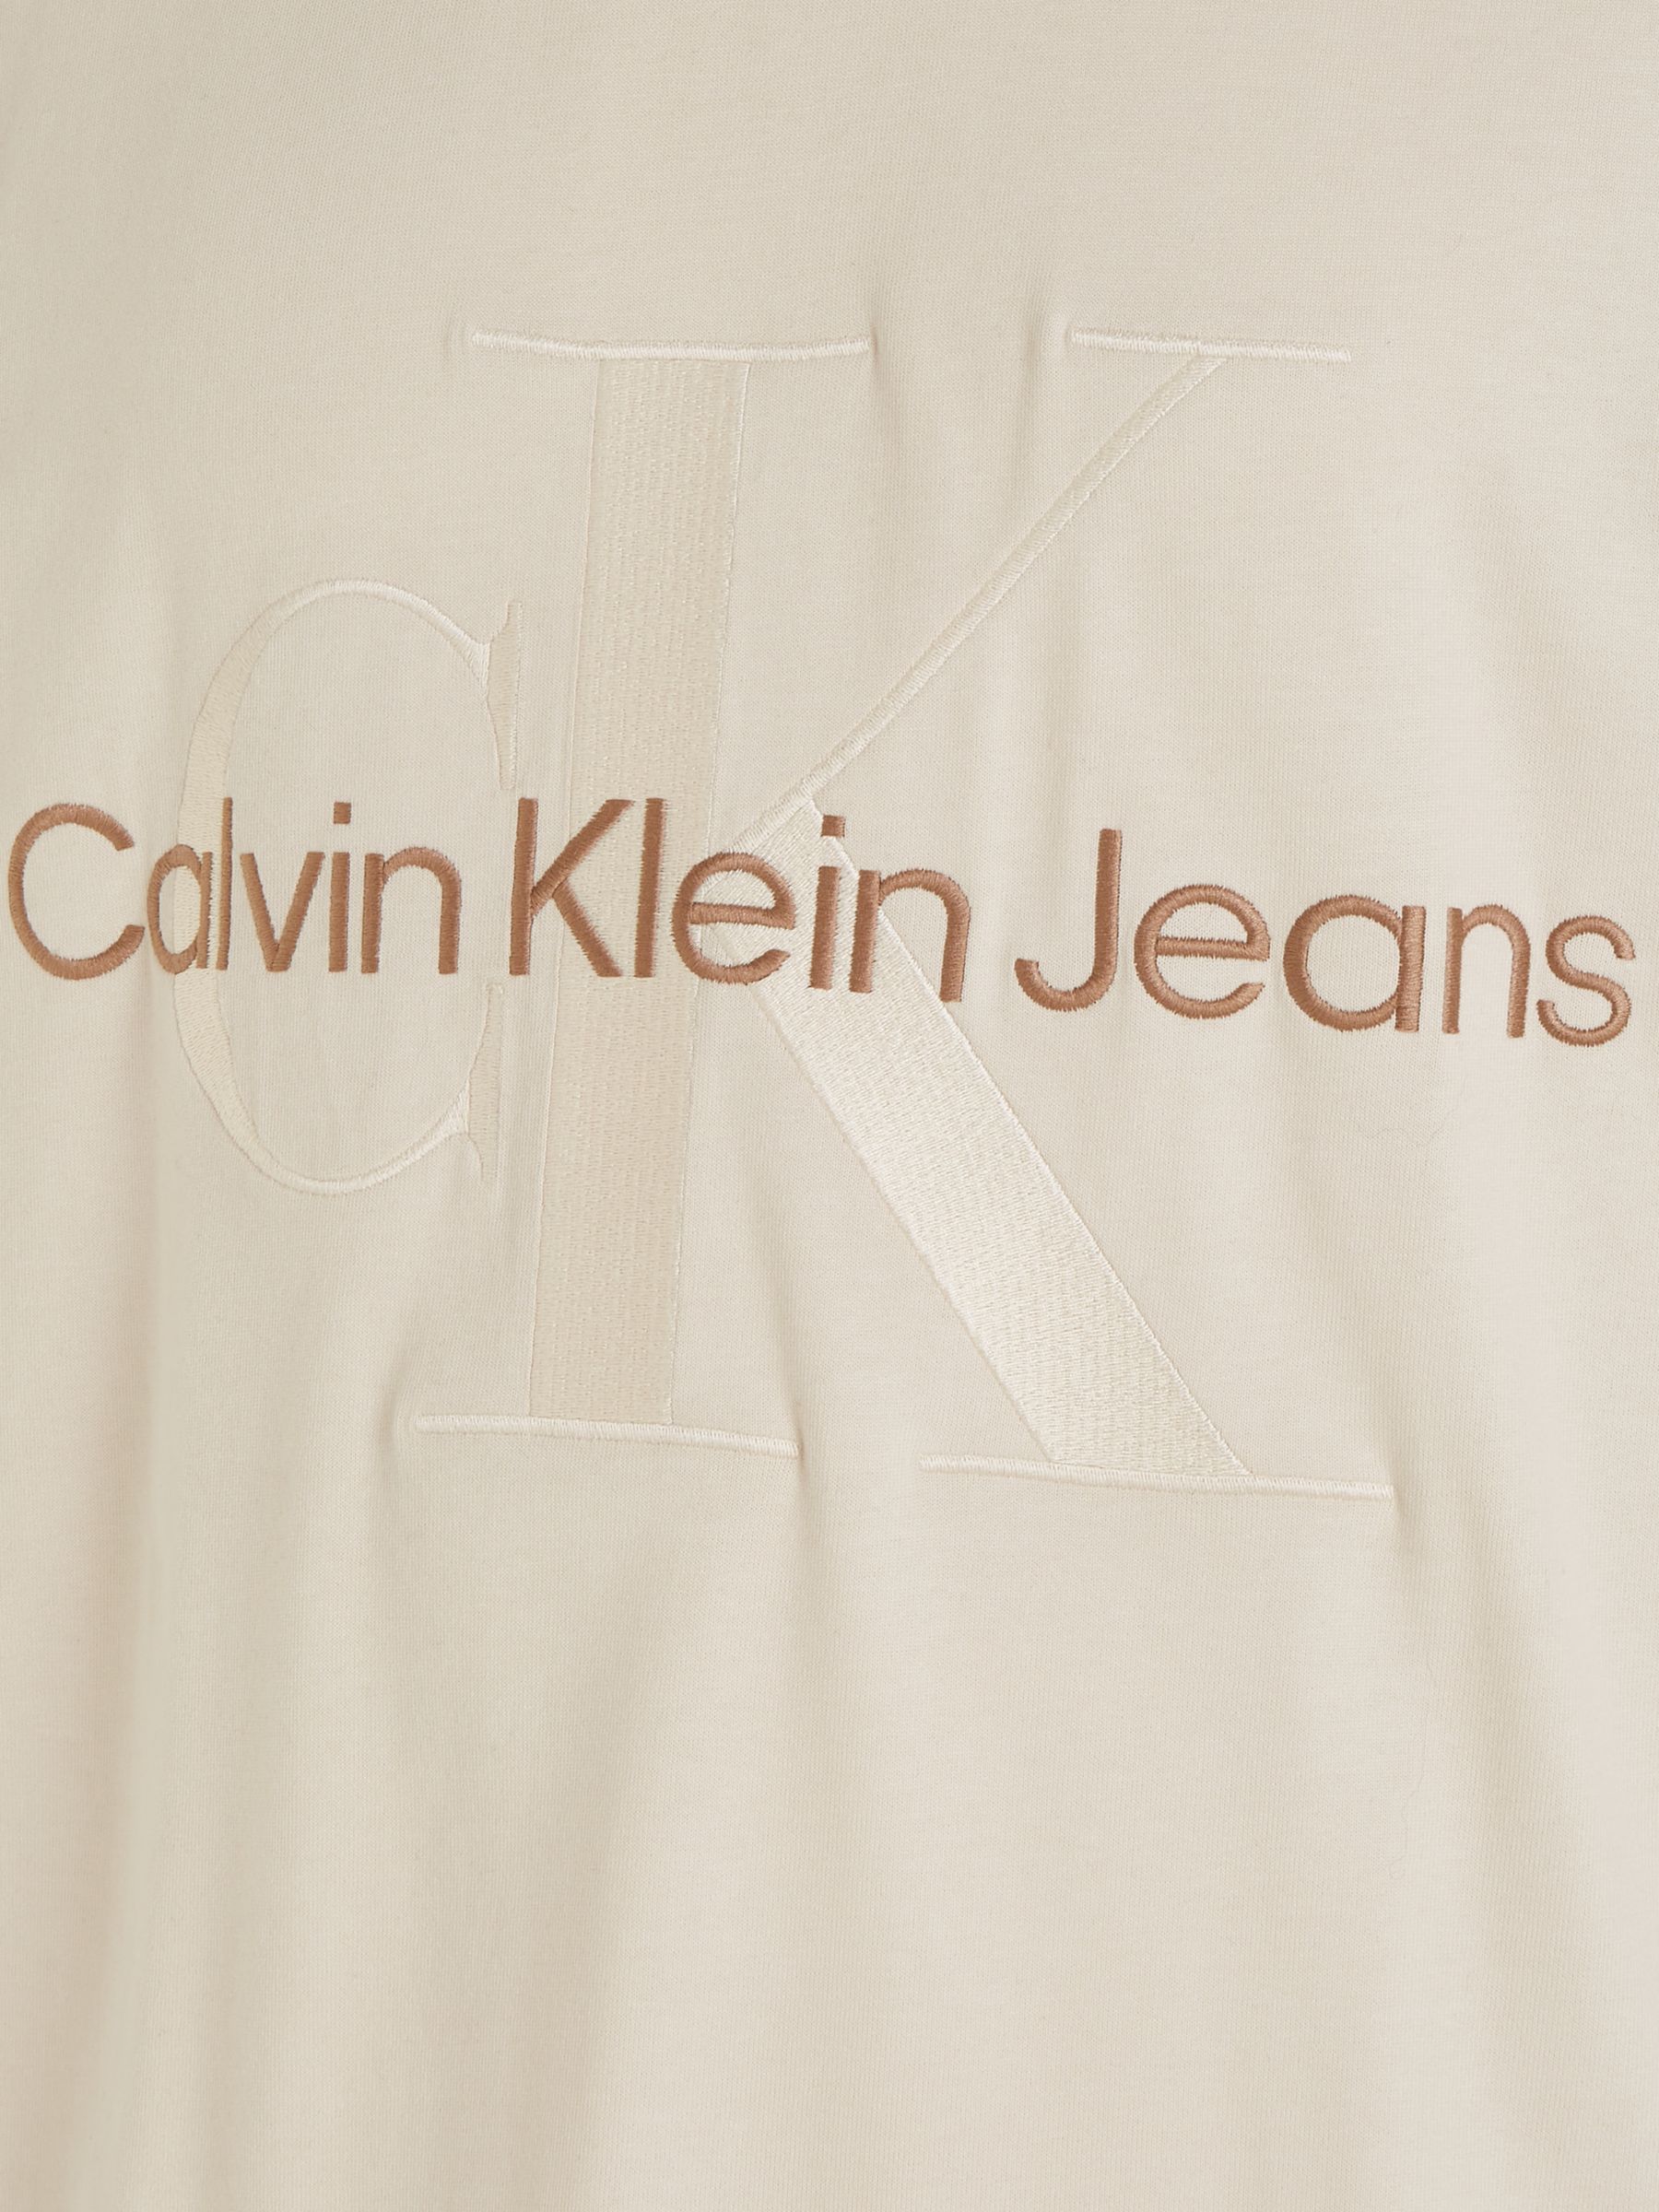 Buy Calvin Klein Jeans Wash Monologo T-Shirt, Ivory Online at johnlewis.com